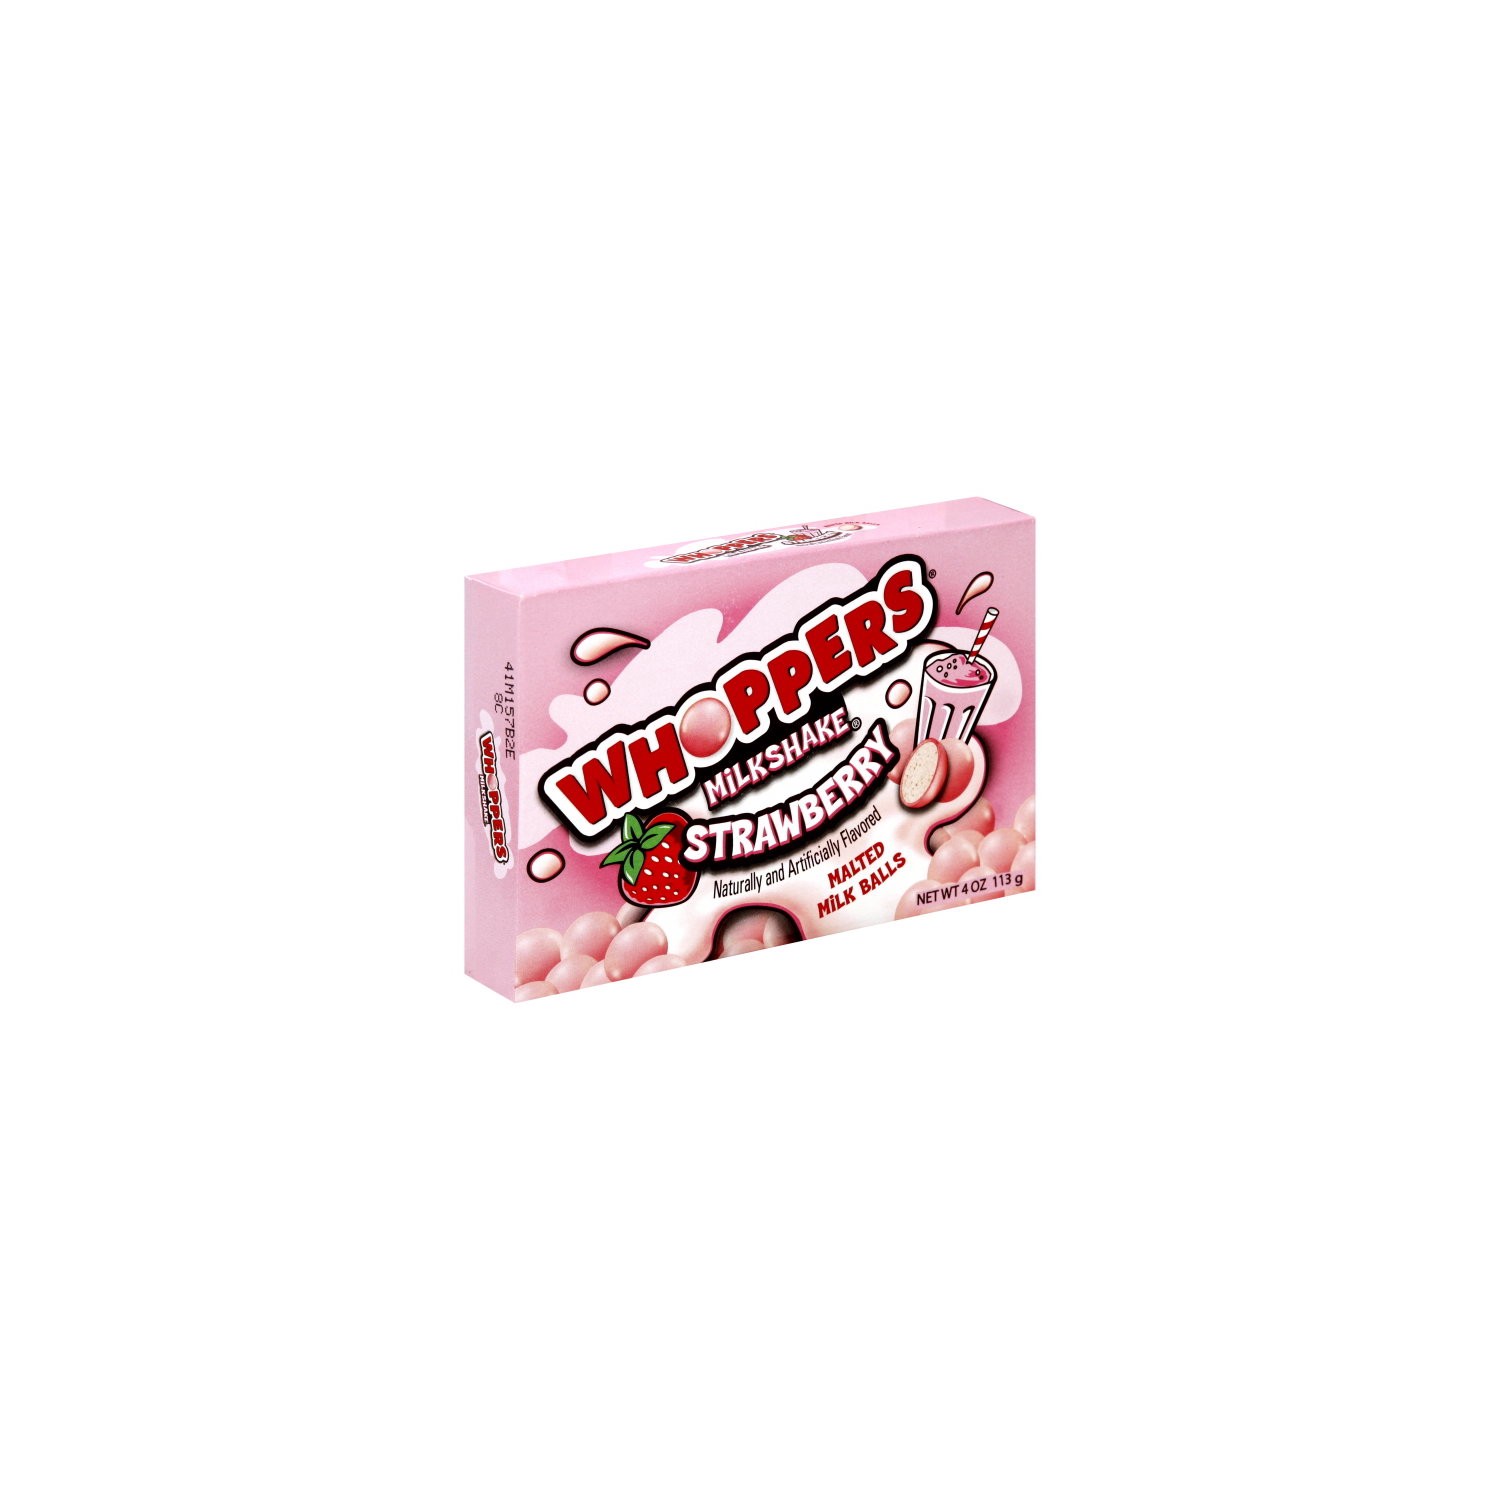 Hershey's Whoppers Milkshake Strawberry Malted Milk Balls Theater Box 4 oz